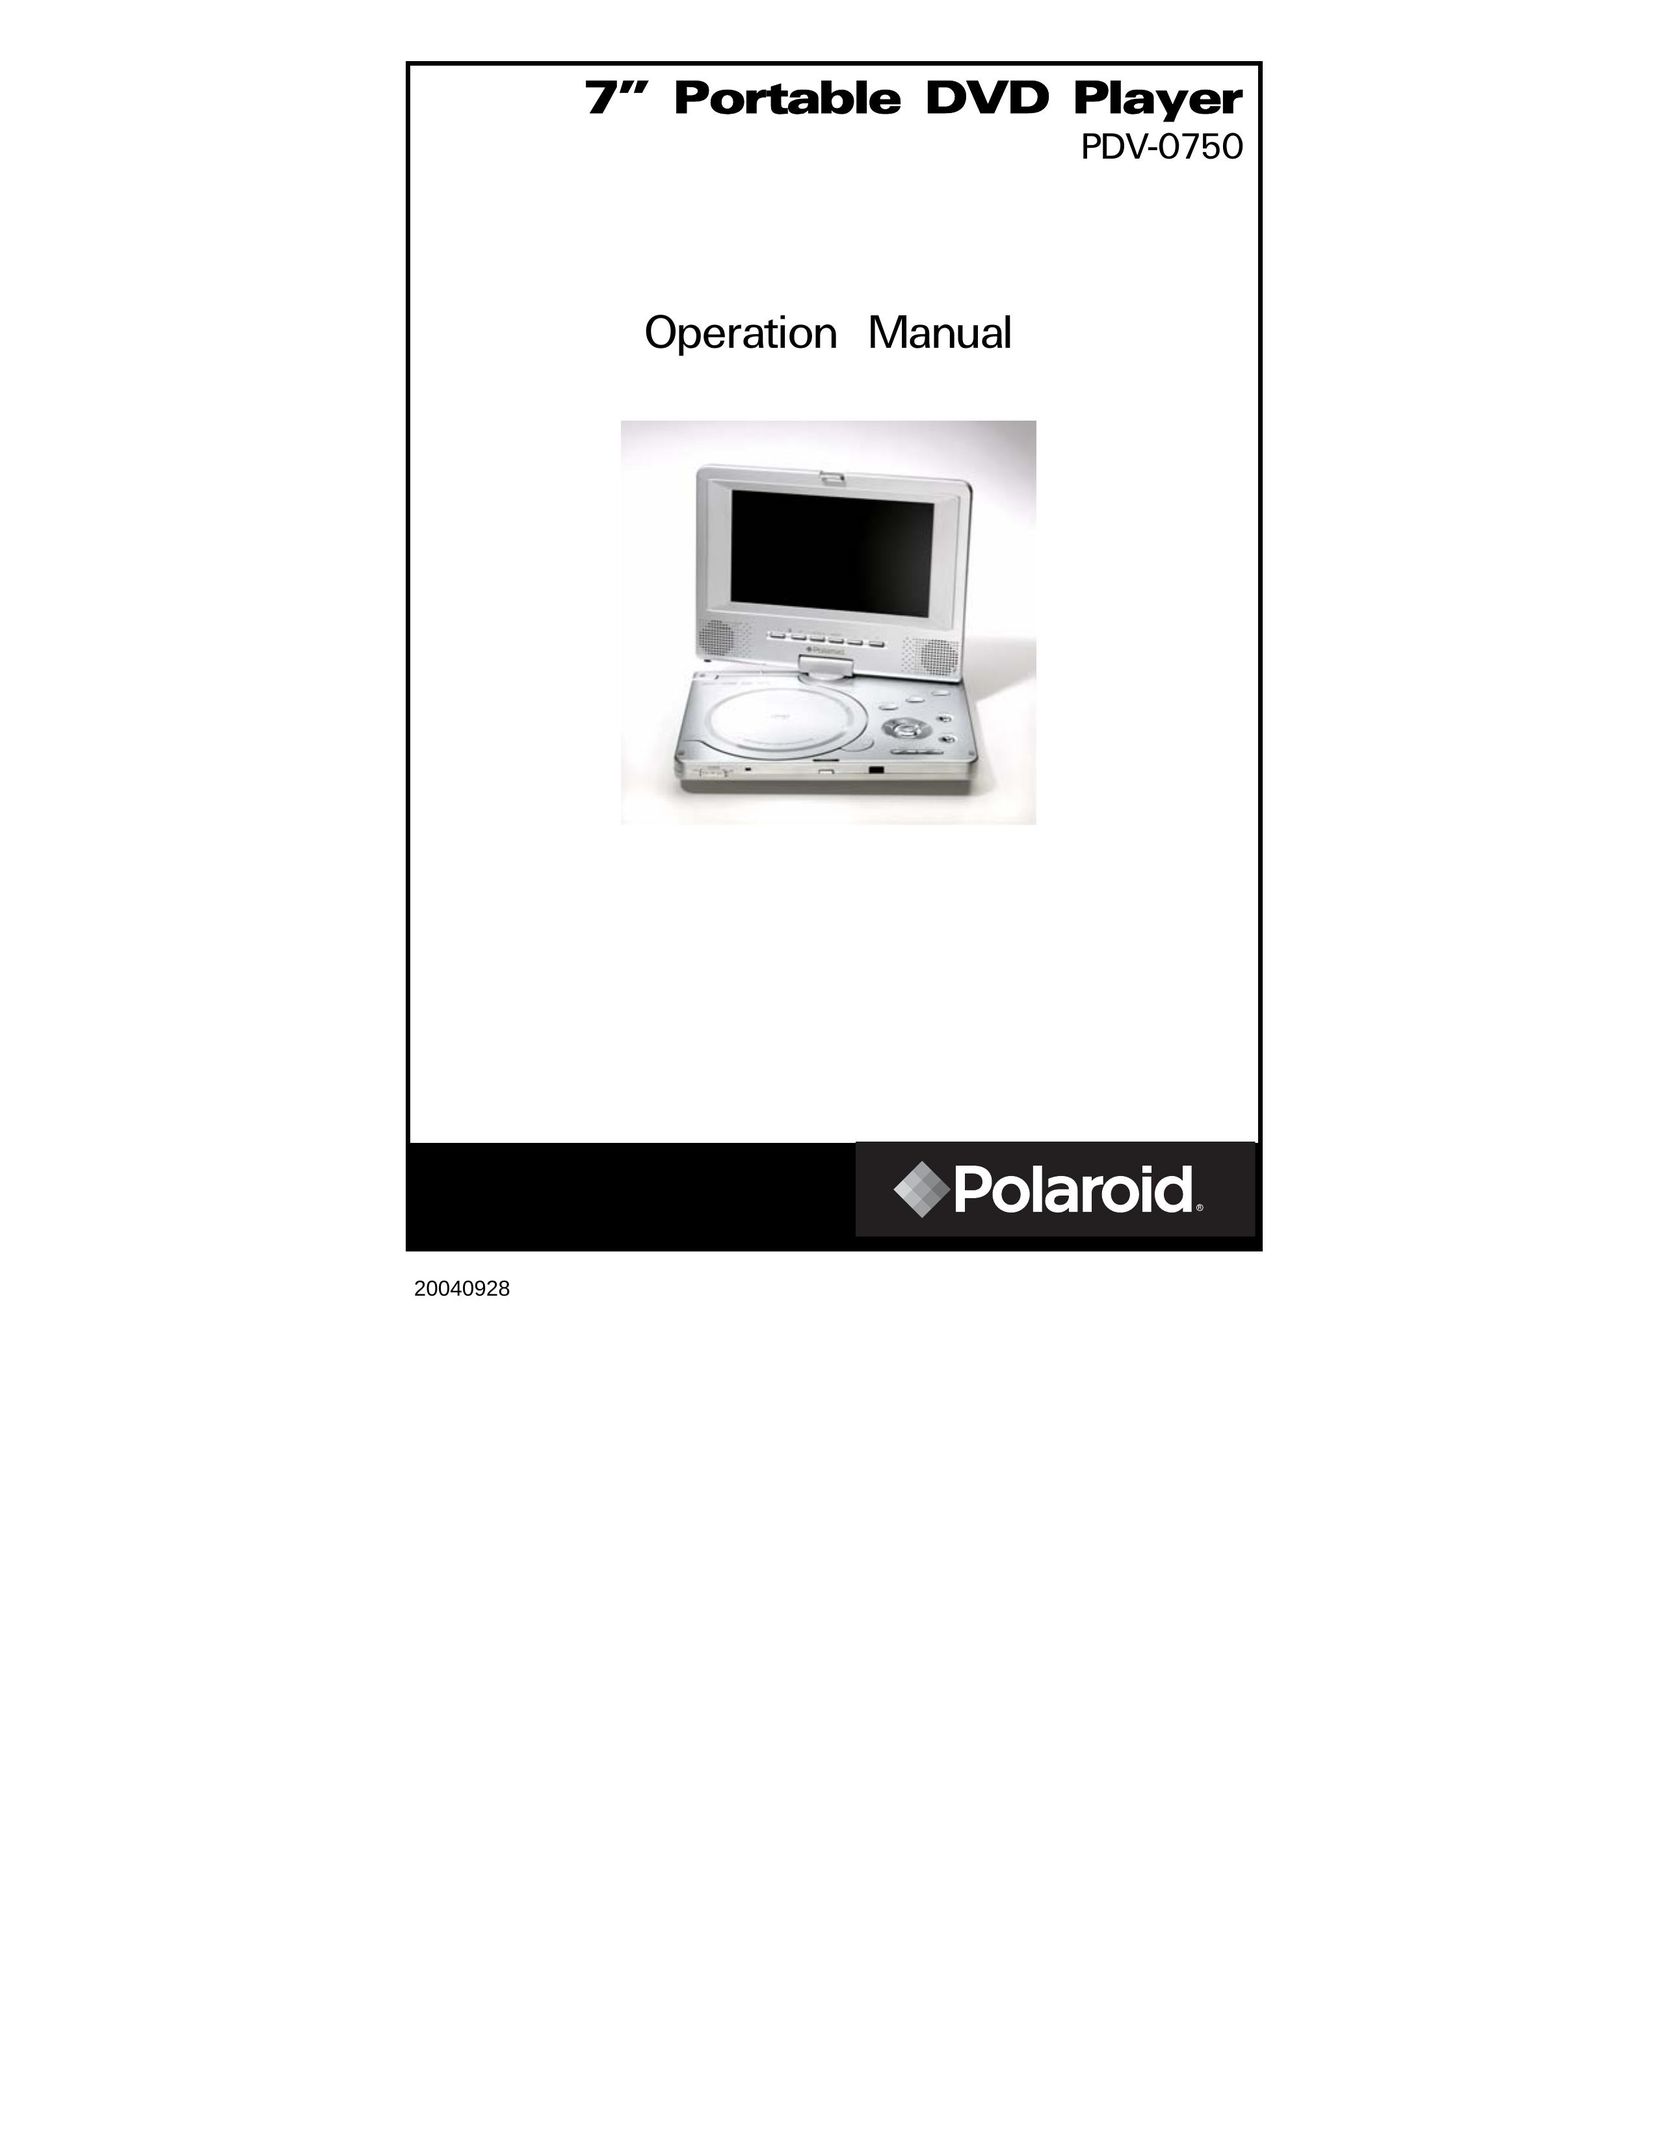 Polaroid PDV-0750 DVD Player User Manual